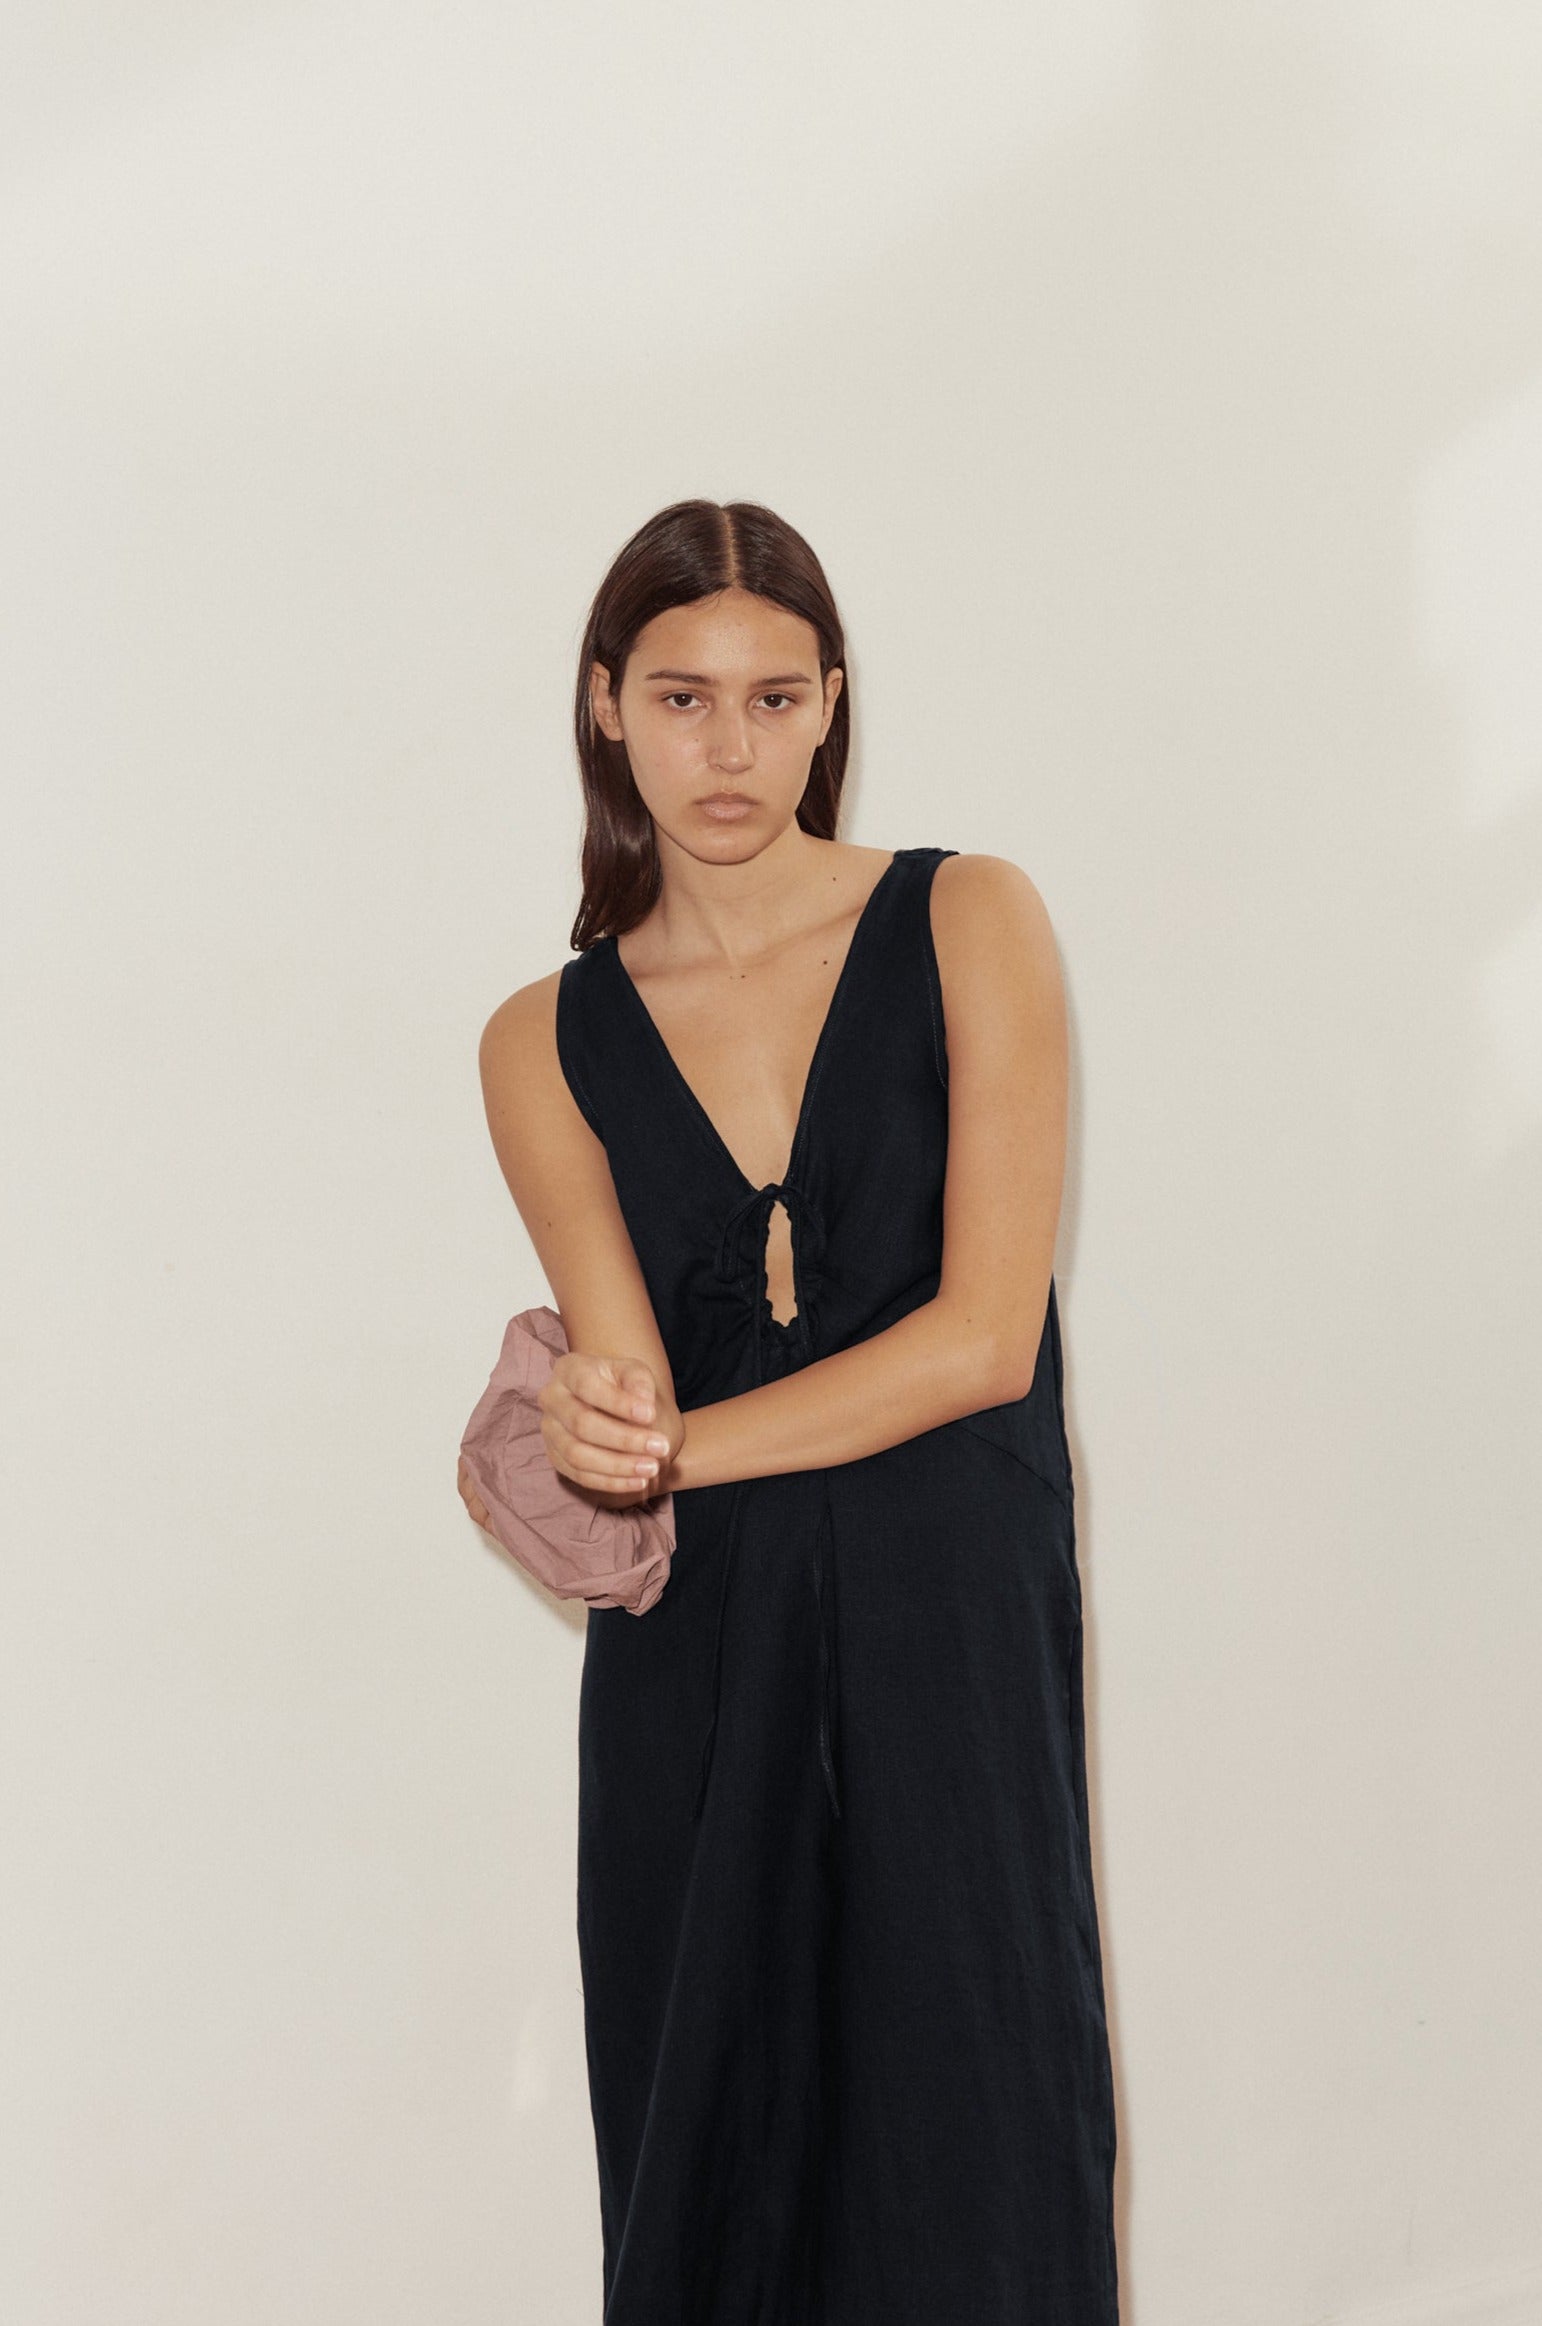 Female model wearing Keyhole Dress - Black by Deiji Studios against plain background